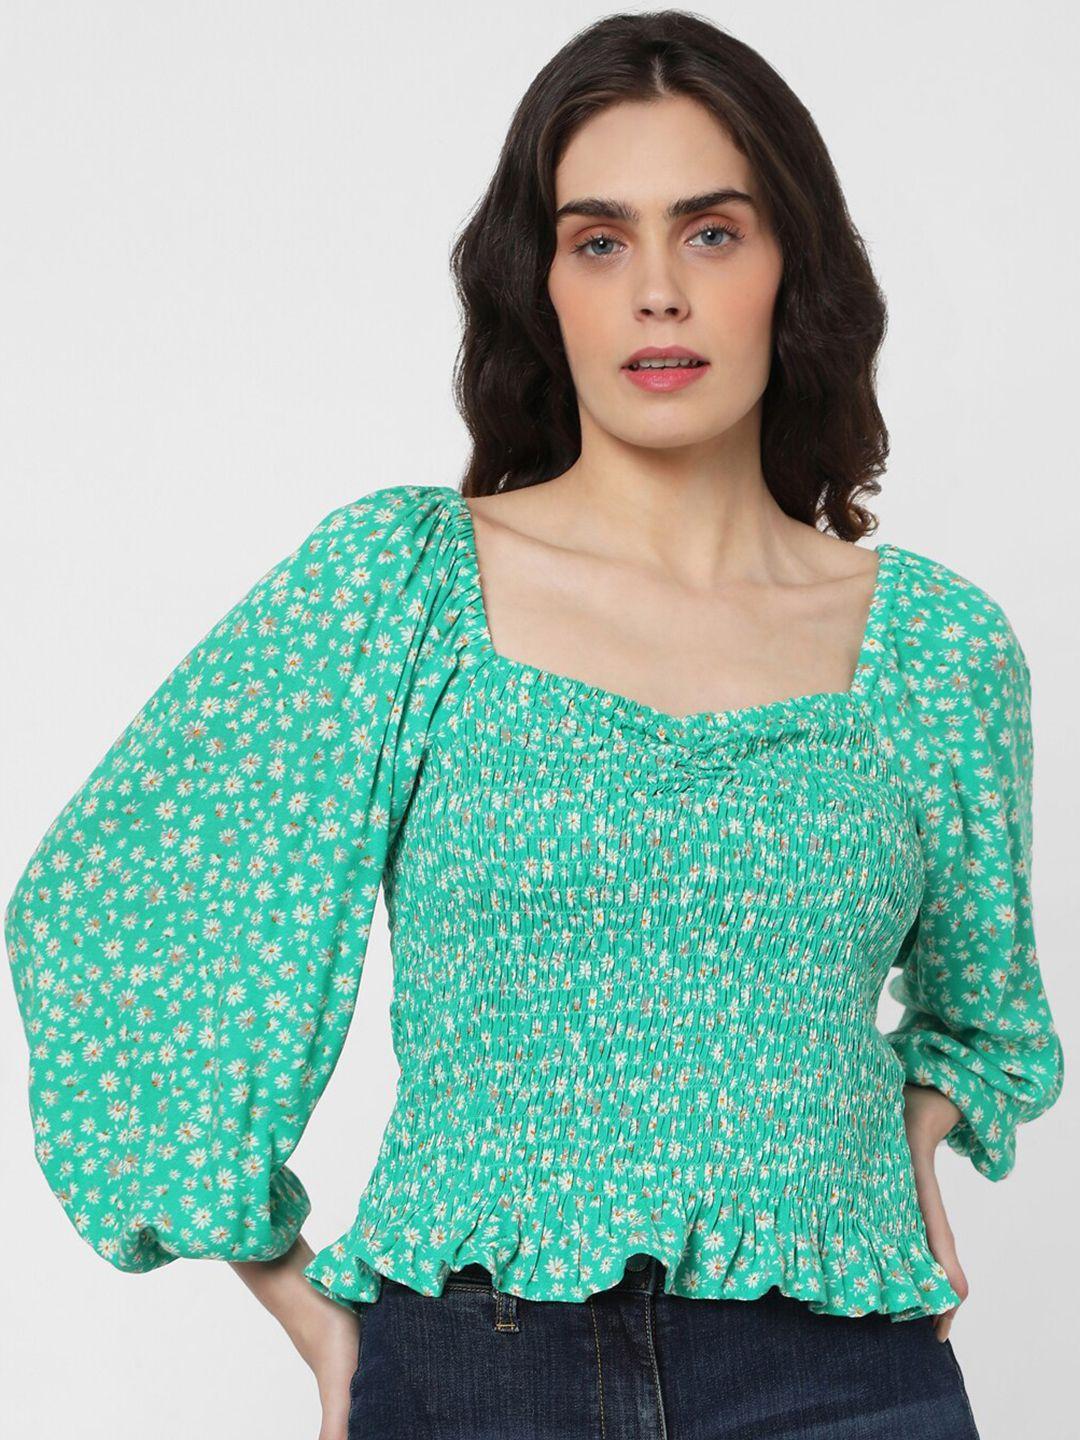 vero moda green smocked floral printed regular top